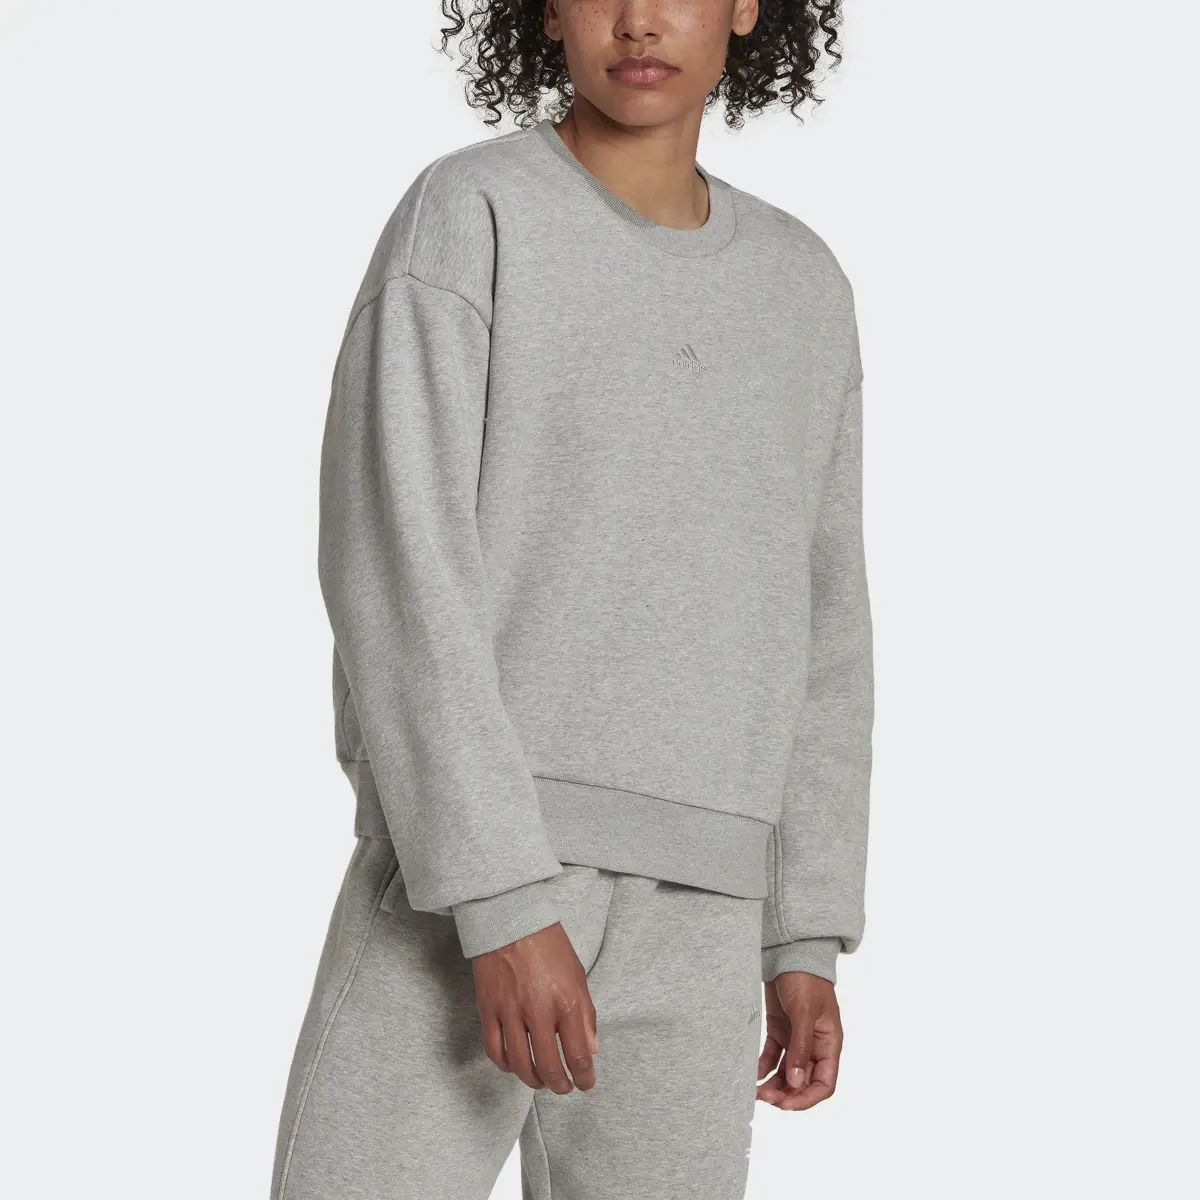 Adidas Sweatshirt em Fleece ALL SZN. 1